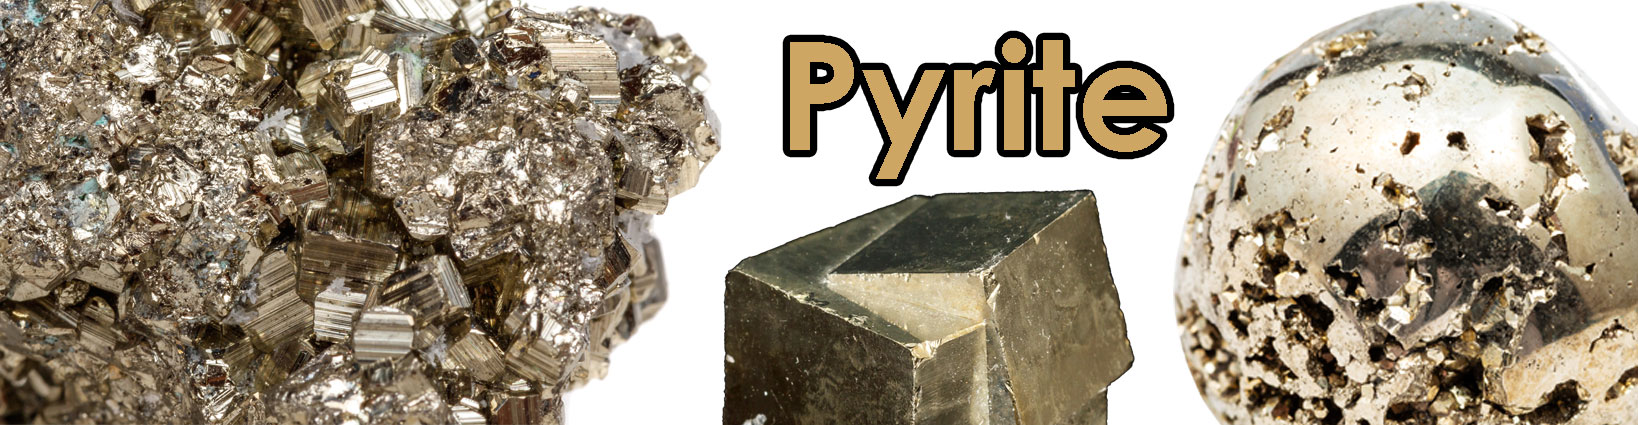 Pyrite Gemstones